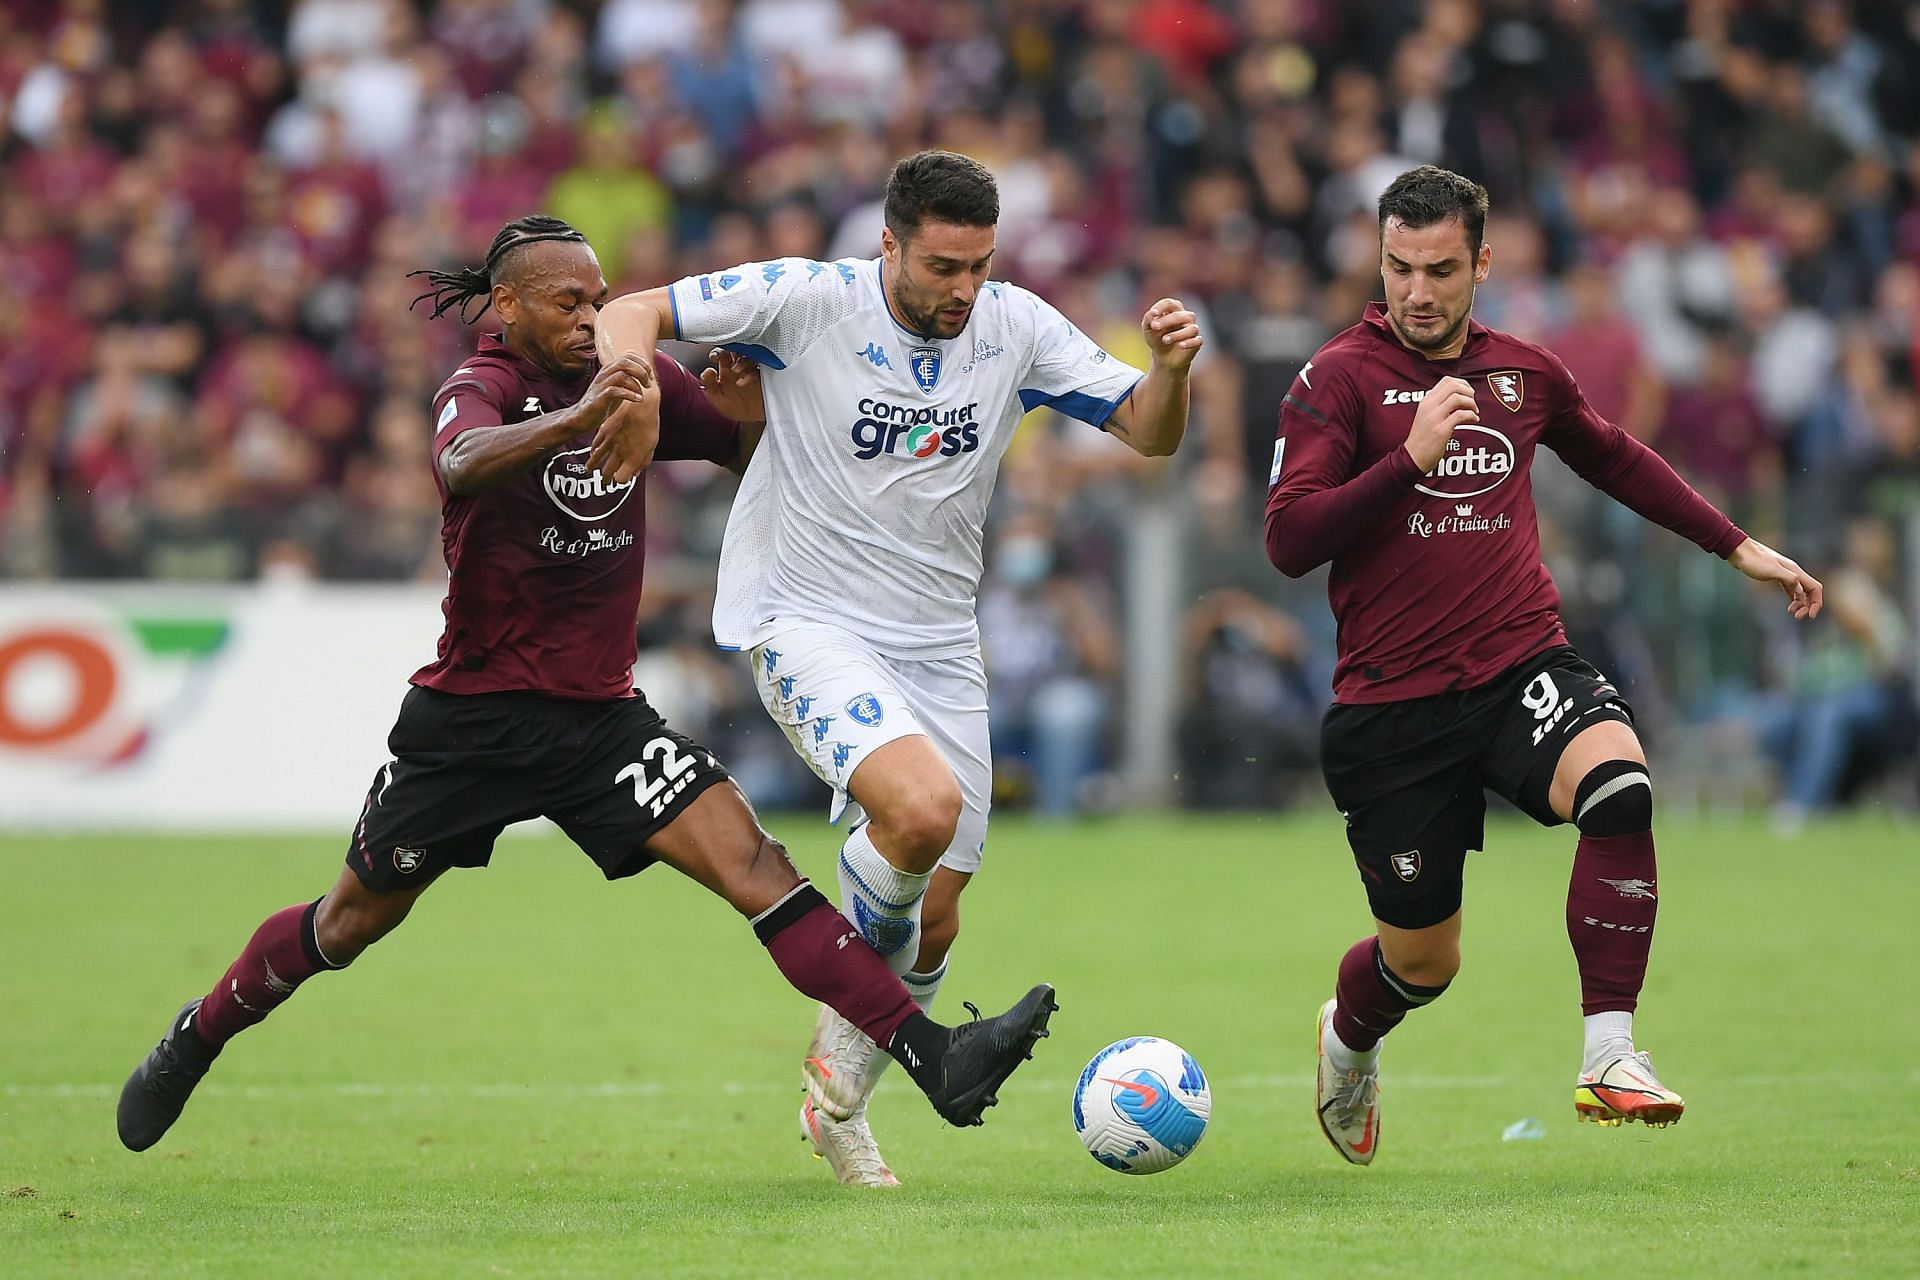 Salernitana and Empoli meet in a Serie A fixture on Saturday